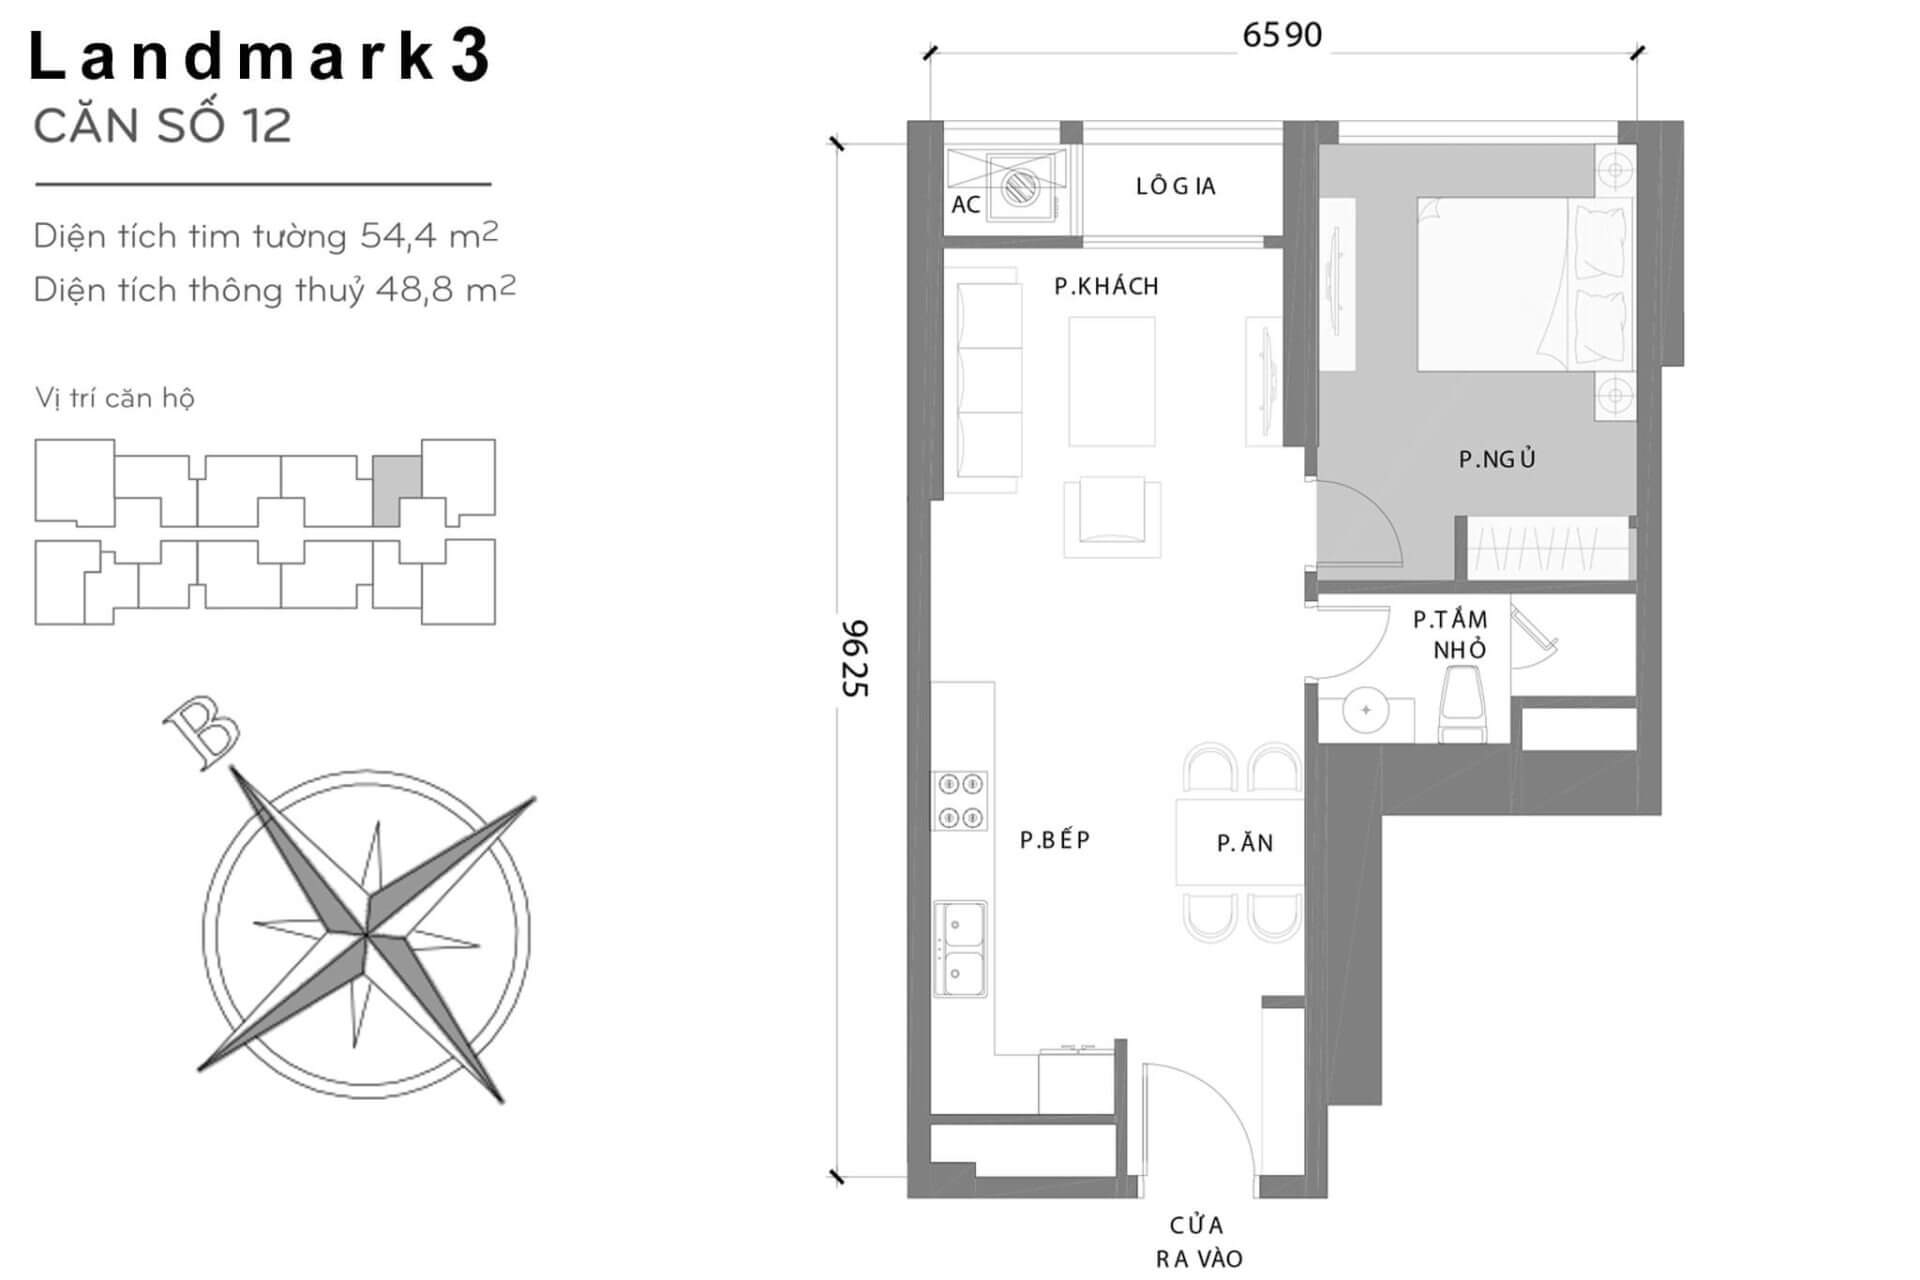 layout căn hộ số 12 Landmark 3 L3-12